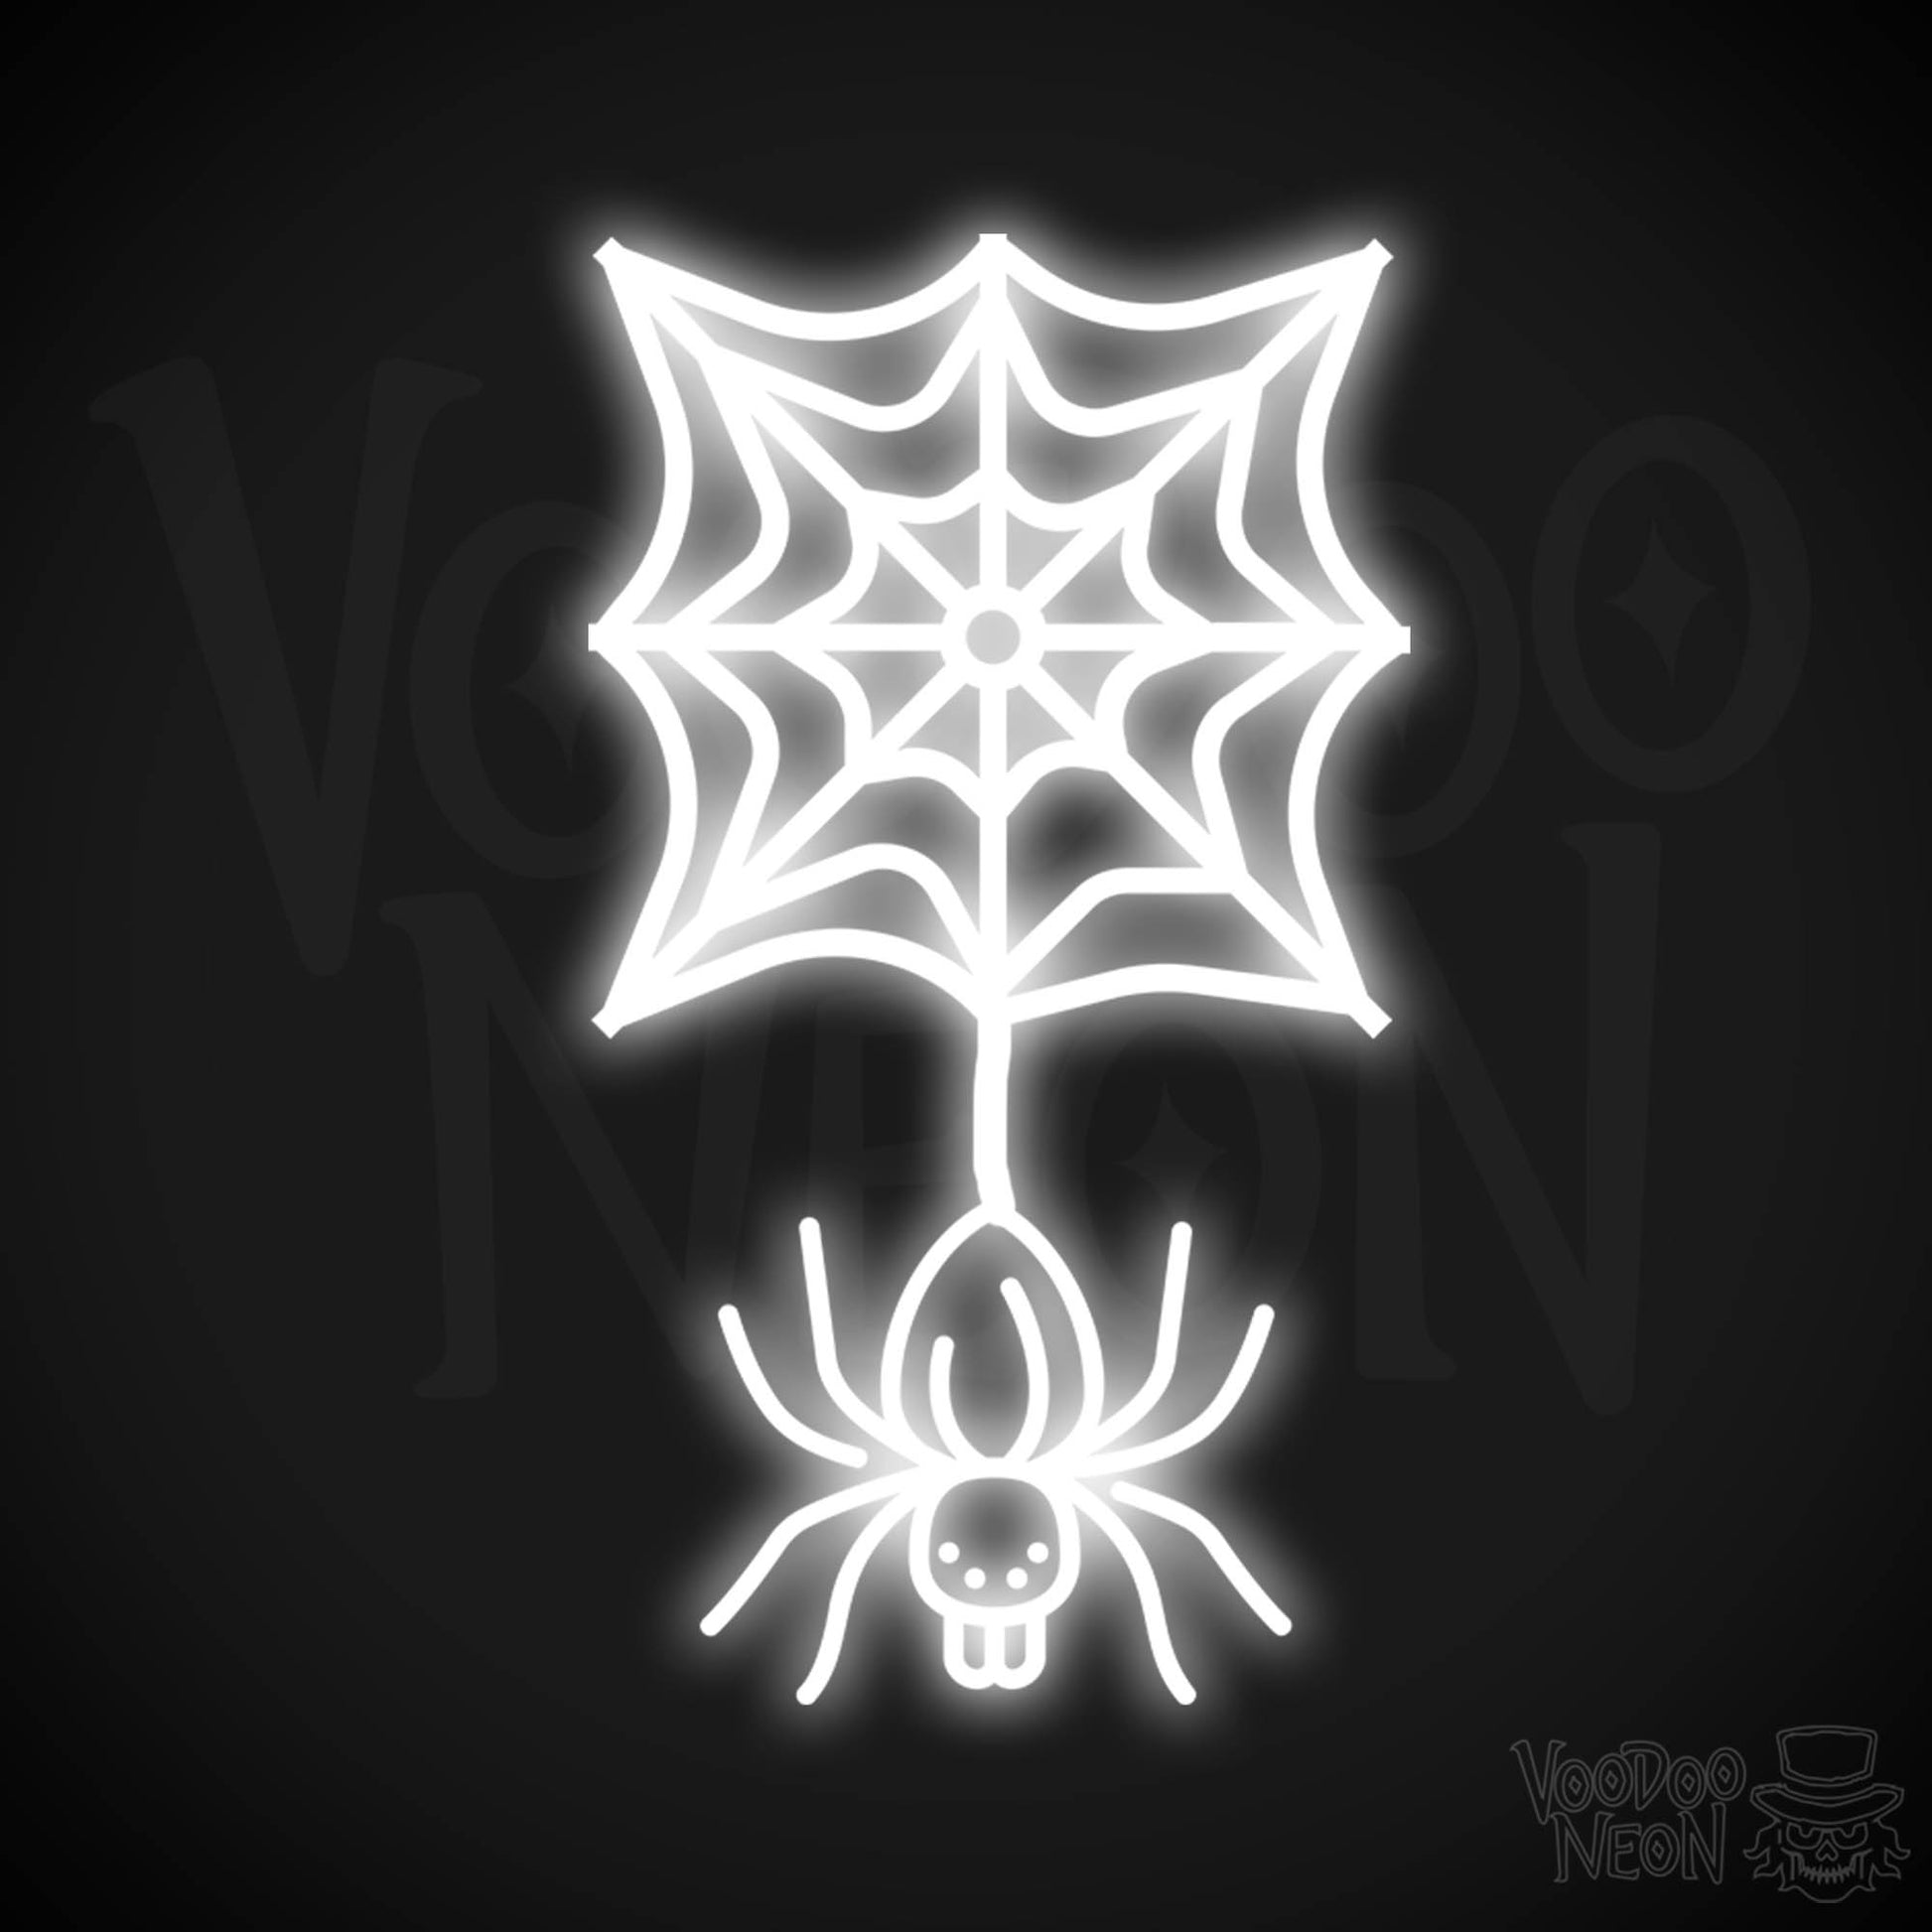 Neon Spider - Spider Neon Sign - Halloween LED Neon Spider - Color White